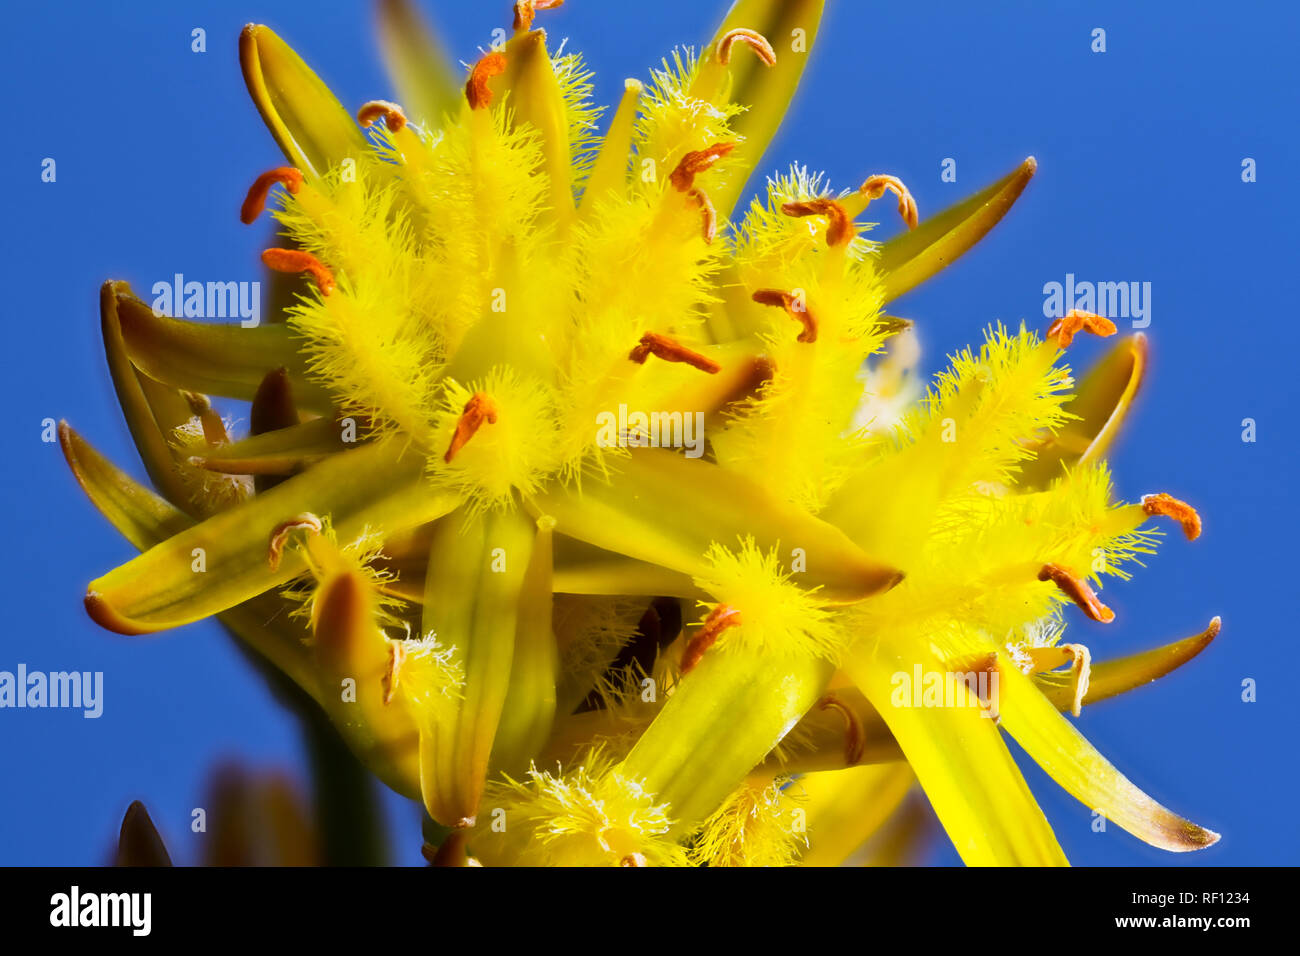 bog asphodel flower focus stacked Stock Photo